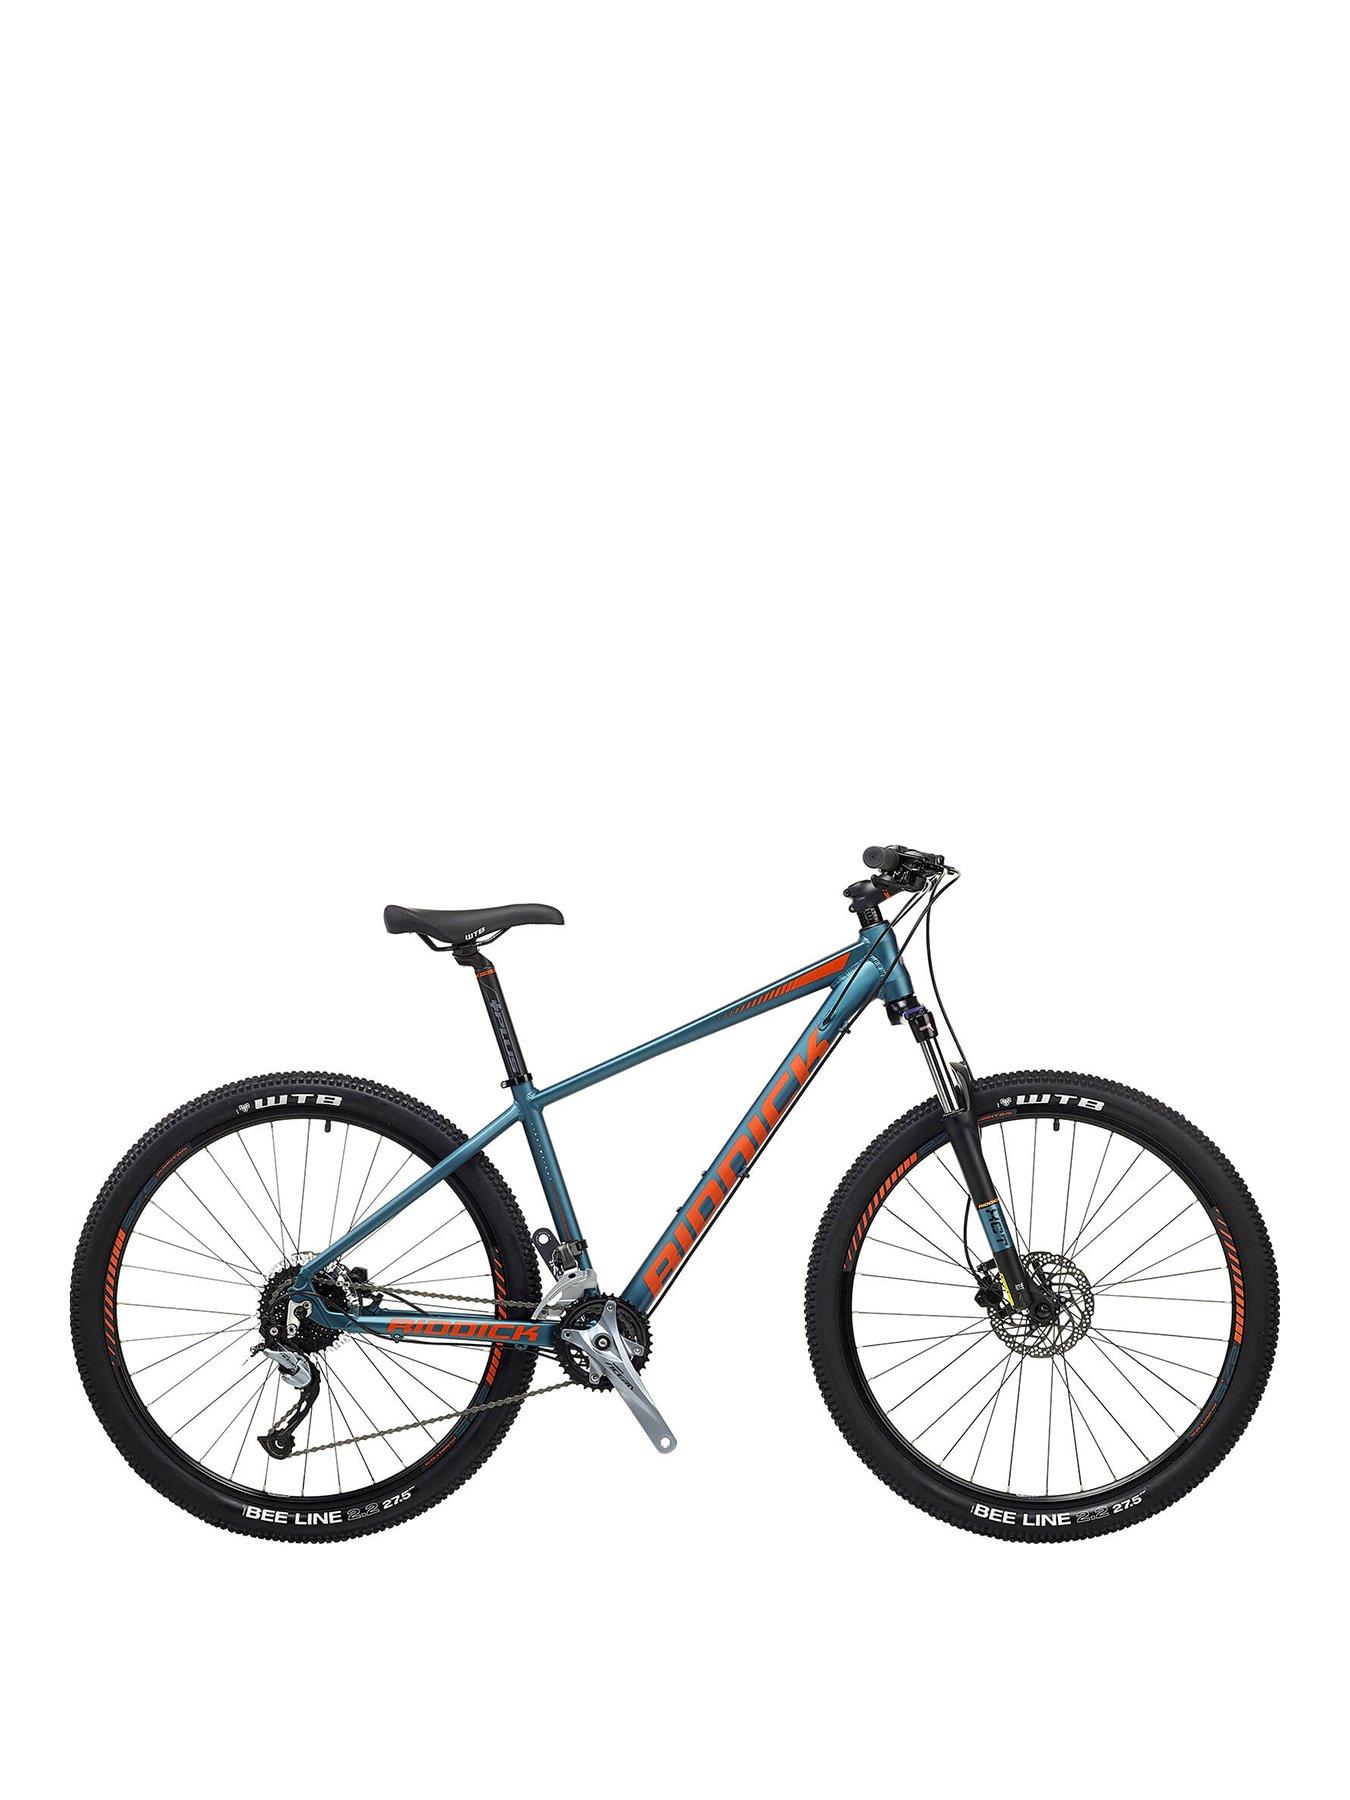 mens mountain bike 20 inch frame